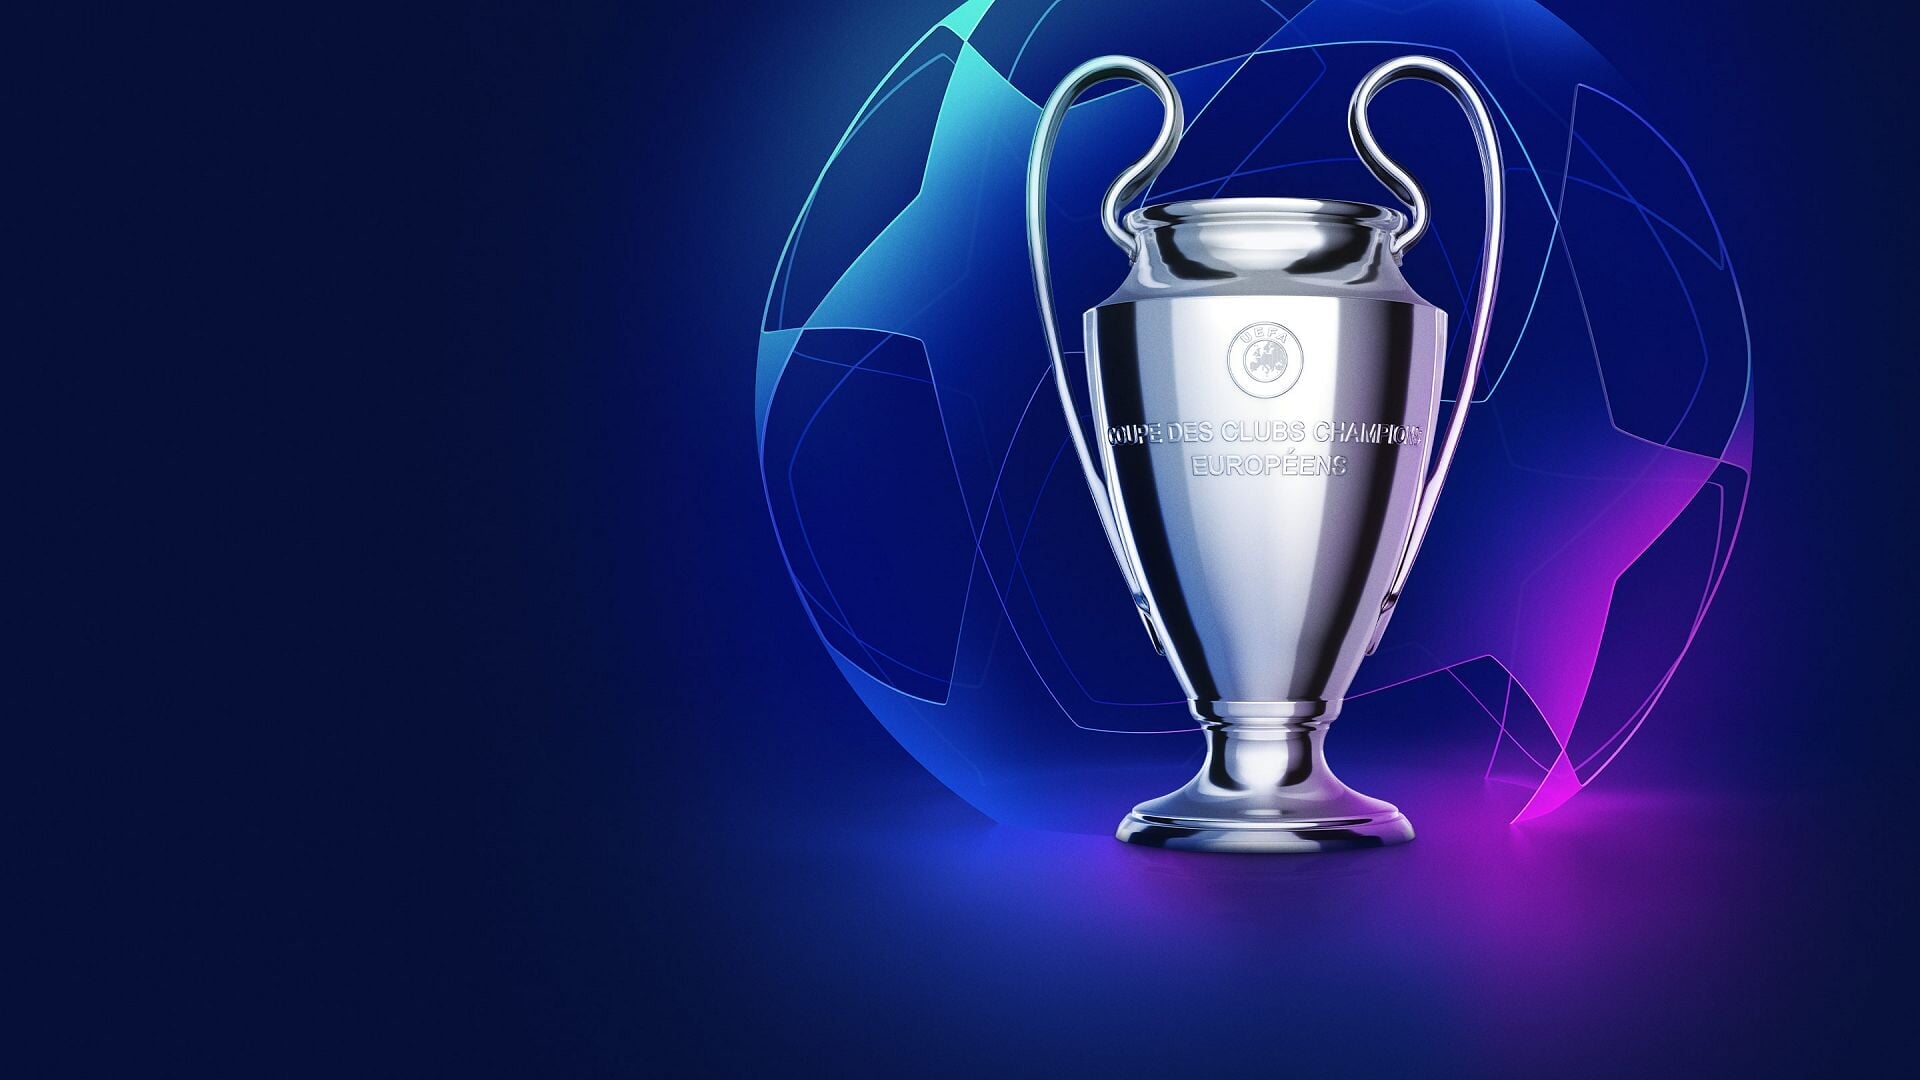 UEFA Champions League 2020-2021